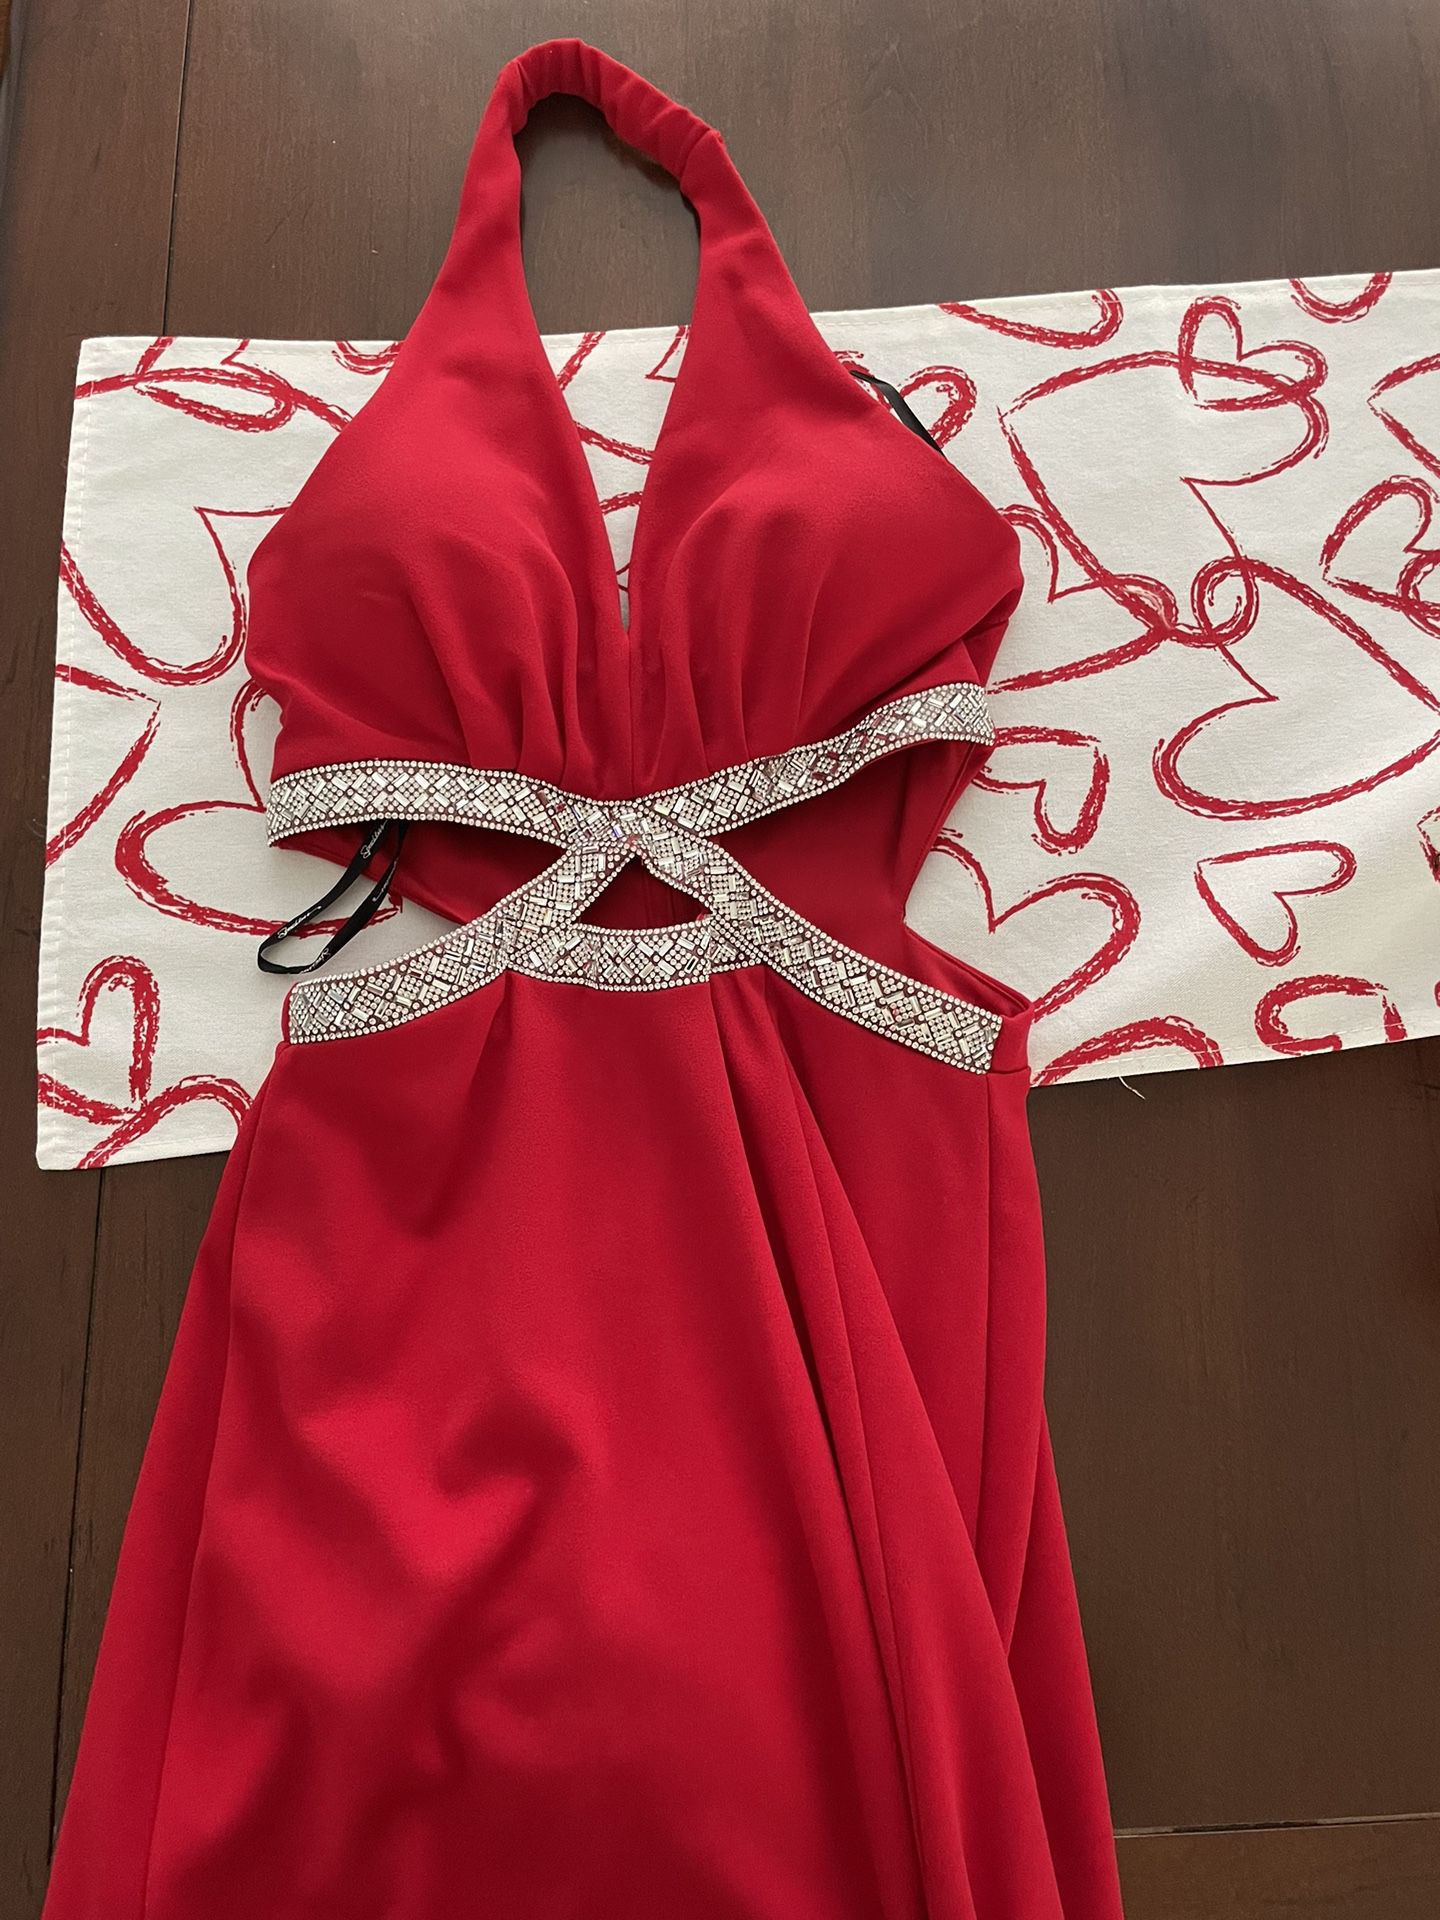 Red Prom Dress!